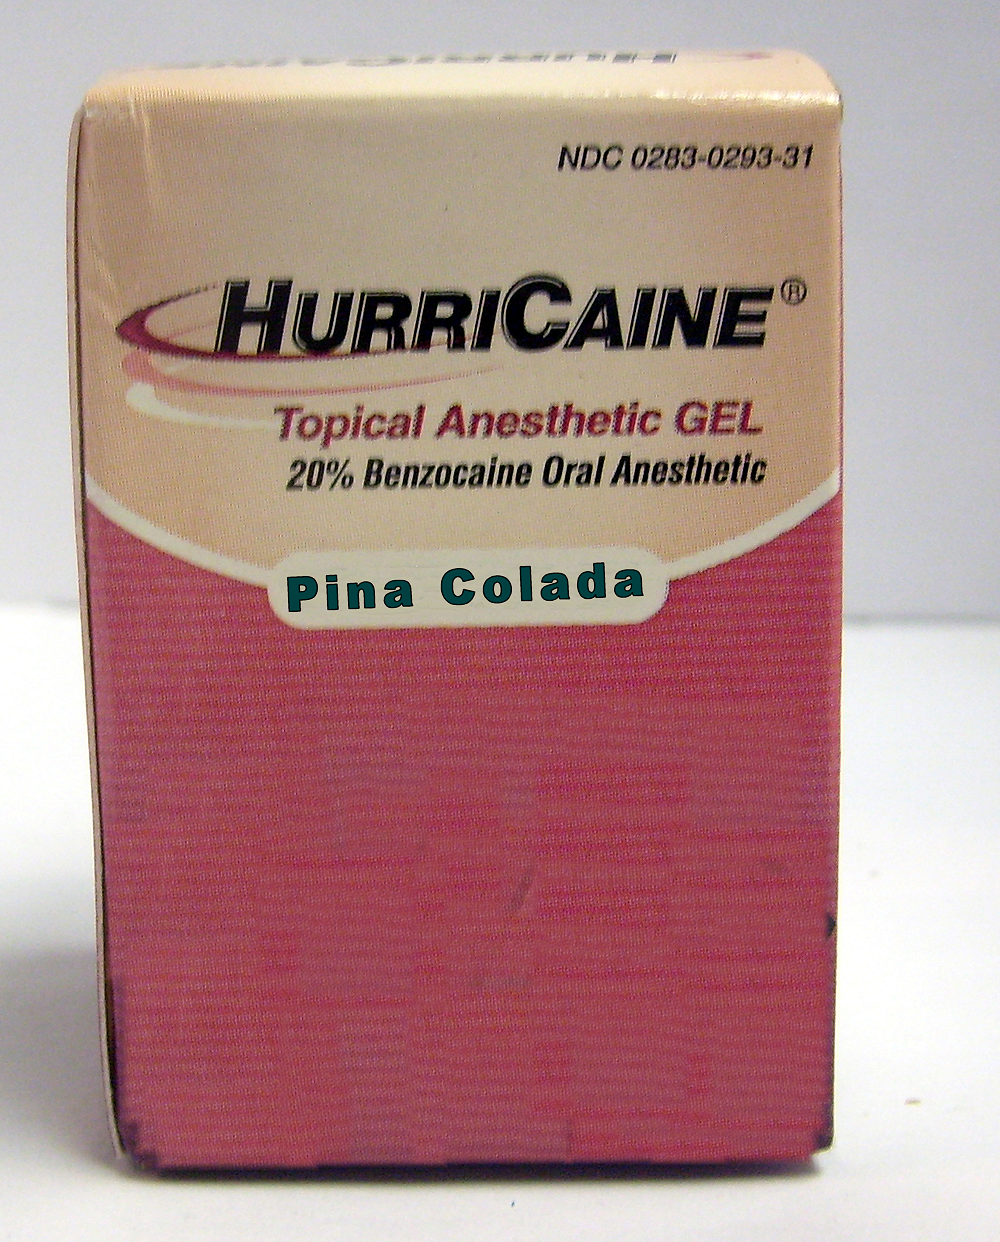 Hurricaine Gel Anesthetic - Pina Colada